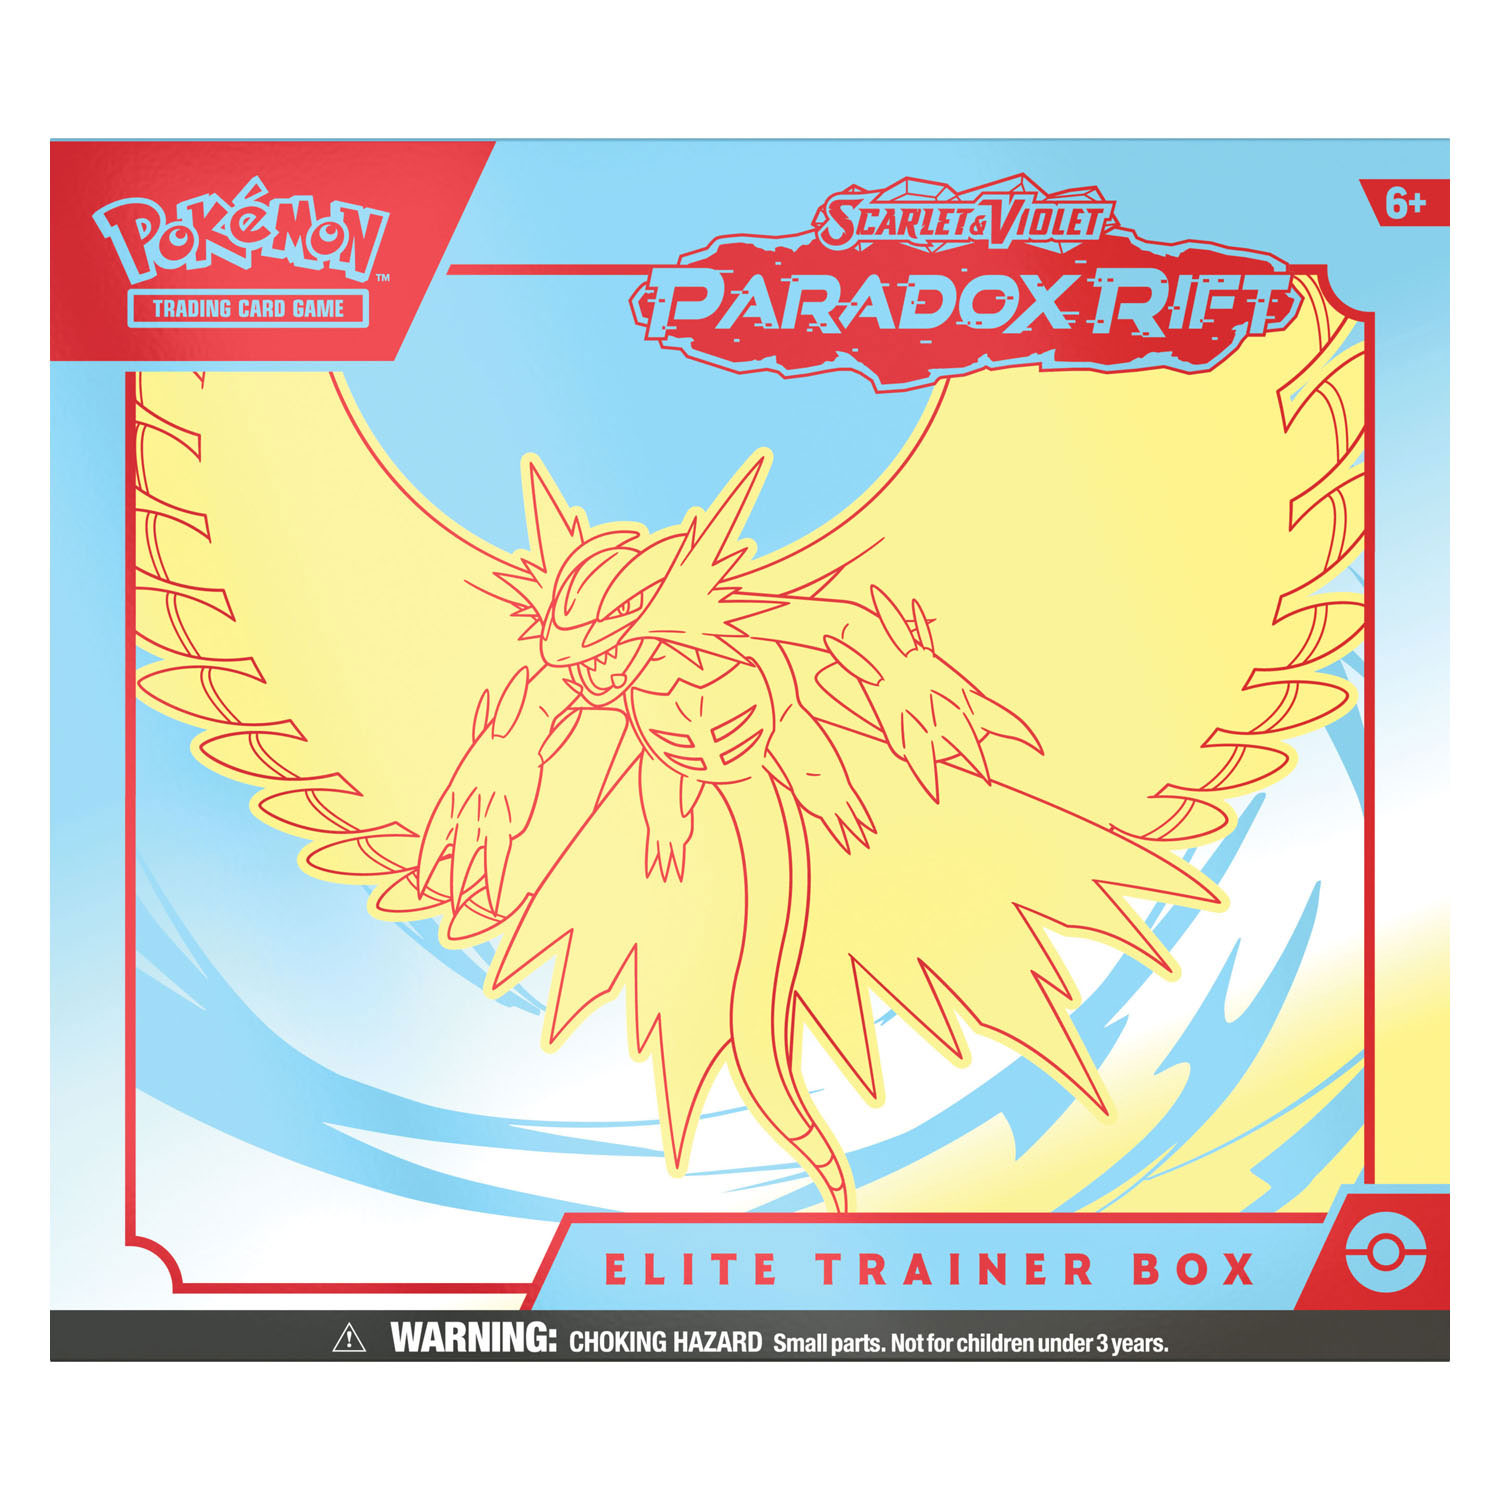 Pokemon TCG S&V Paradox Rift Elite Trainer Box Roaring Moon